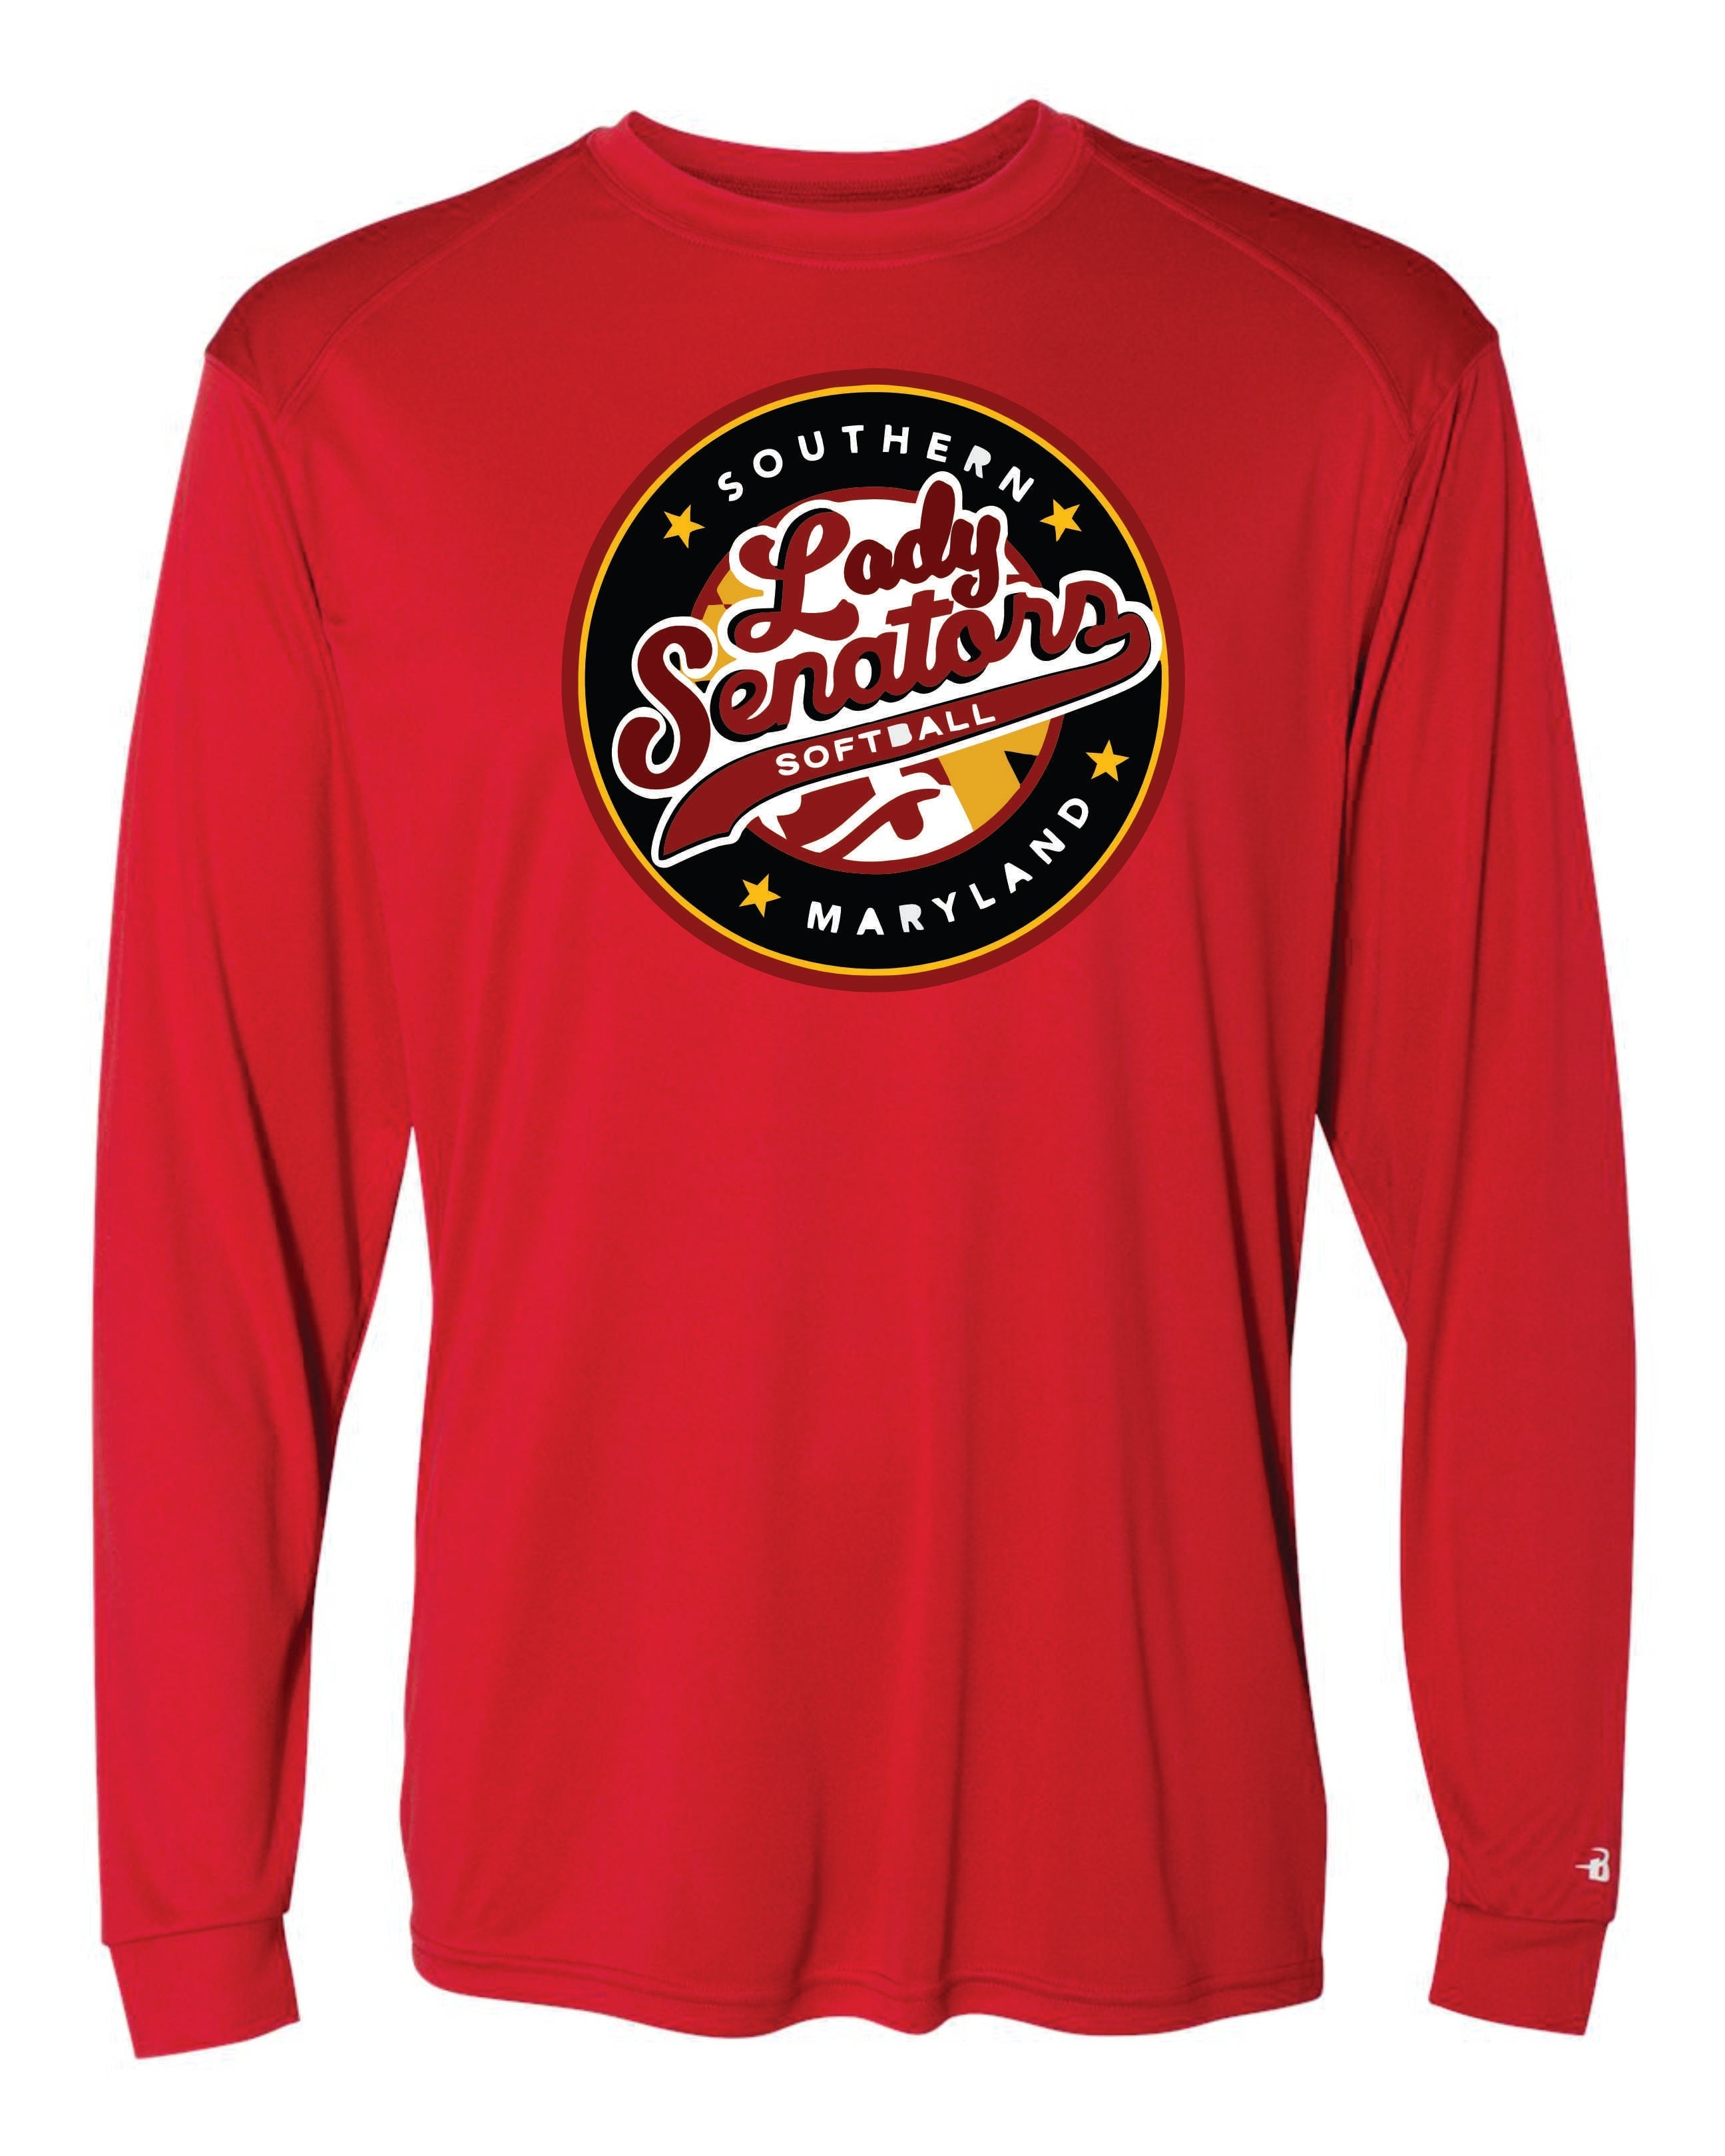 Senators Softball Long Sleeve Dri-Fit Shirt Lady Senators Logo YOUTH